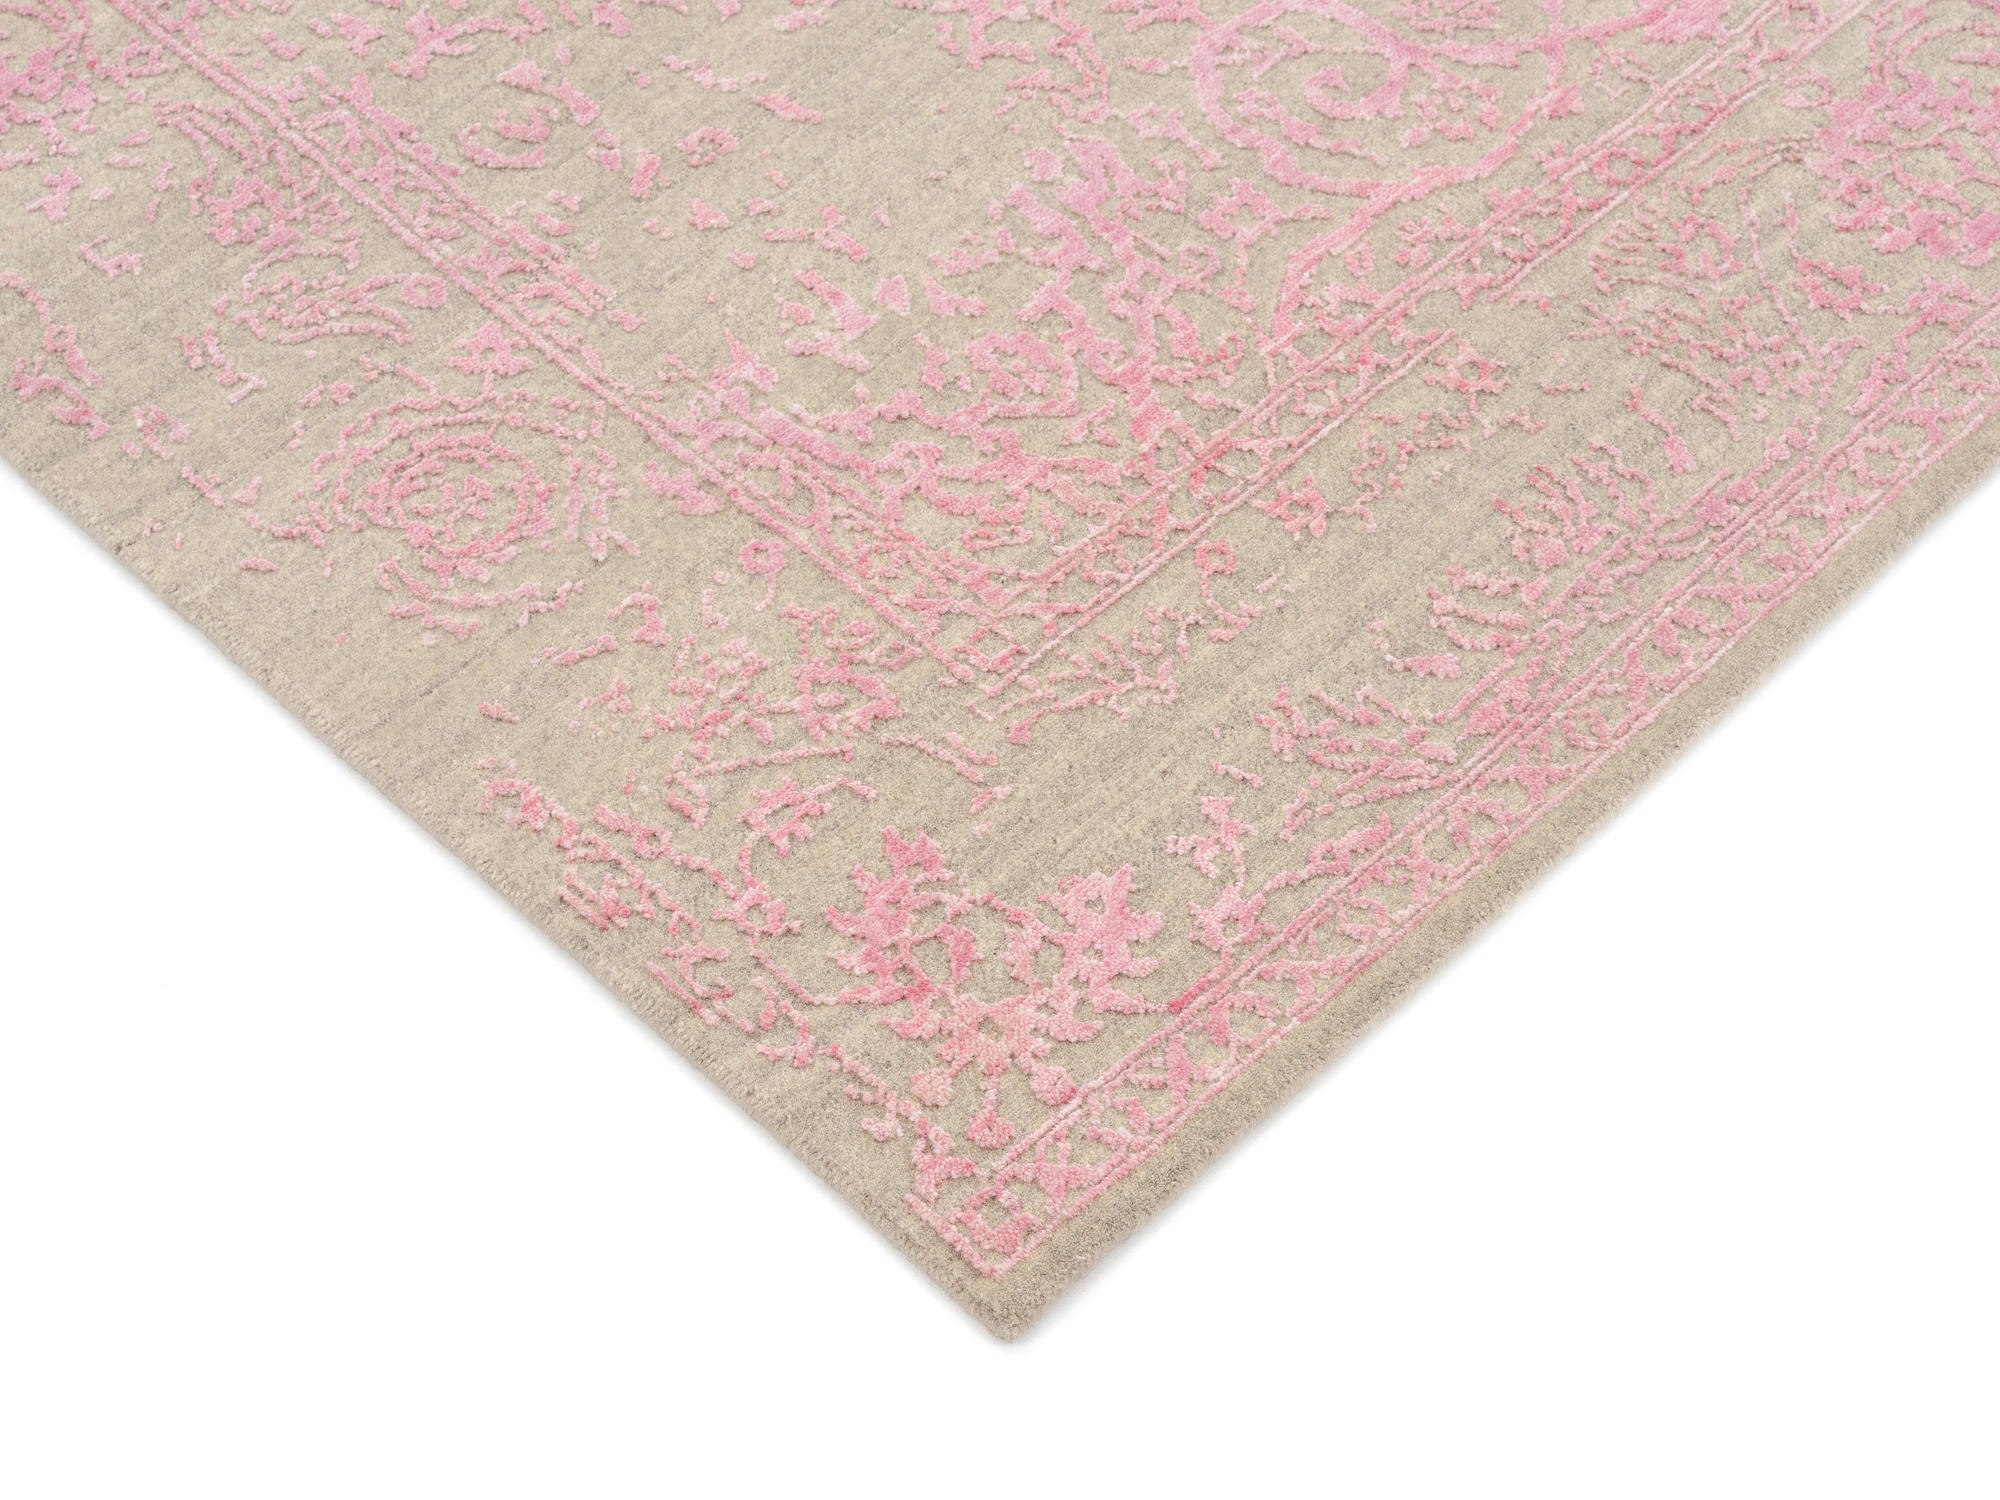 ORIENTTEPPICH  70/140 cm  Rosa, Beige   - Beige/Rosa, Design, Textil (70/140cm) - Musterring